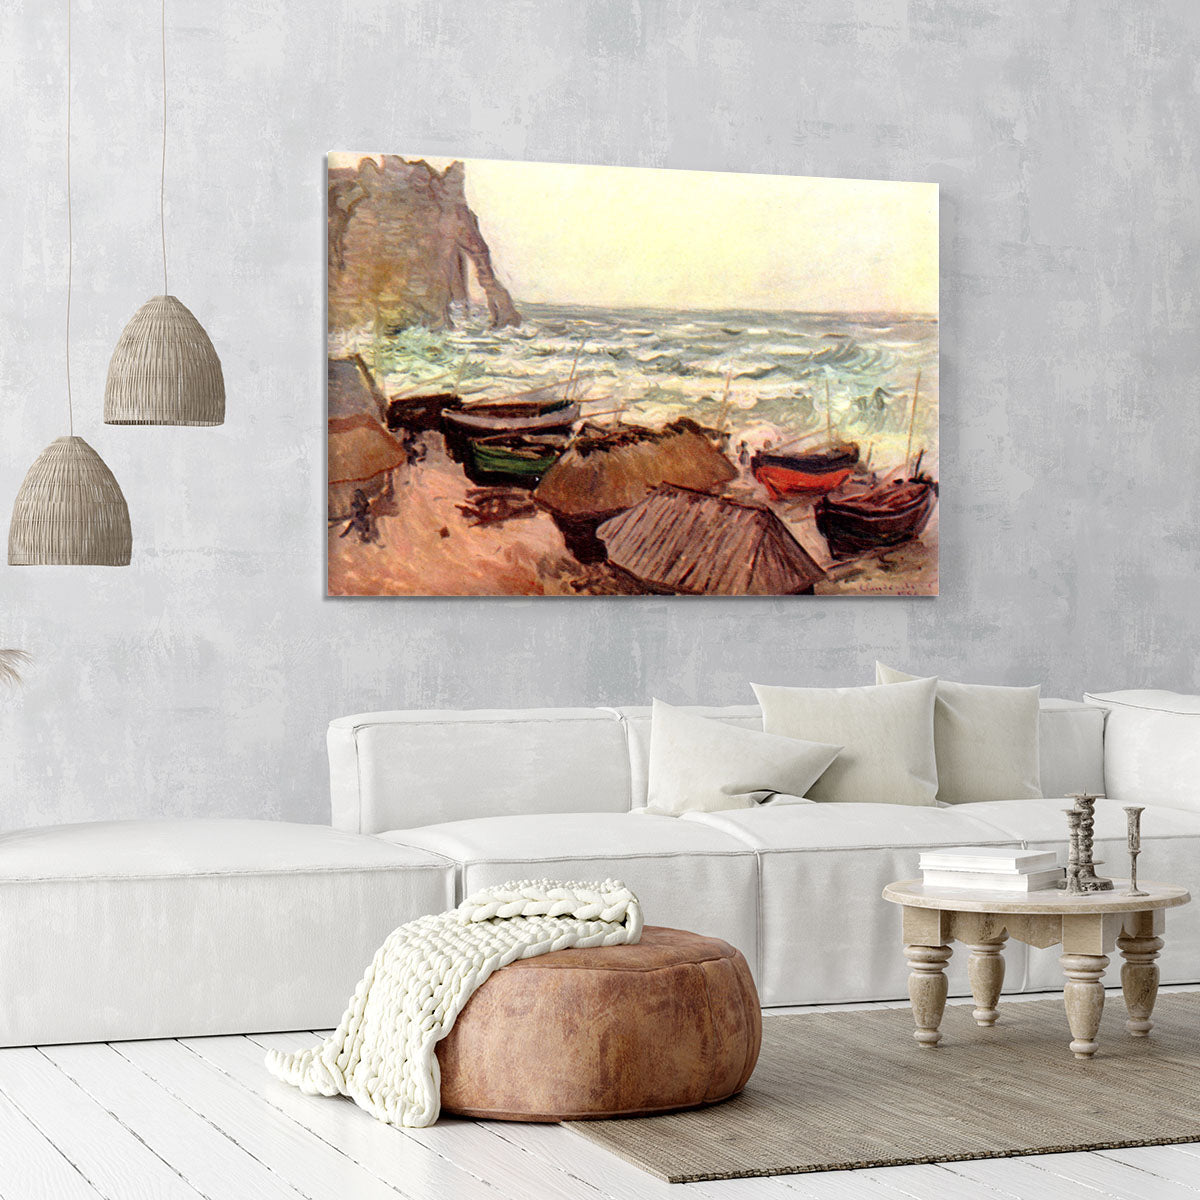 Durchbrochener rock at Etretat by Monet Canvas Print or Poster - Canvas Art Rocks - 6